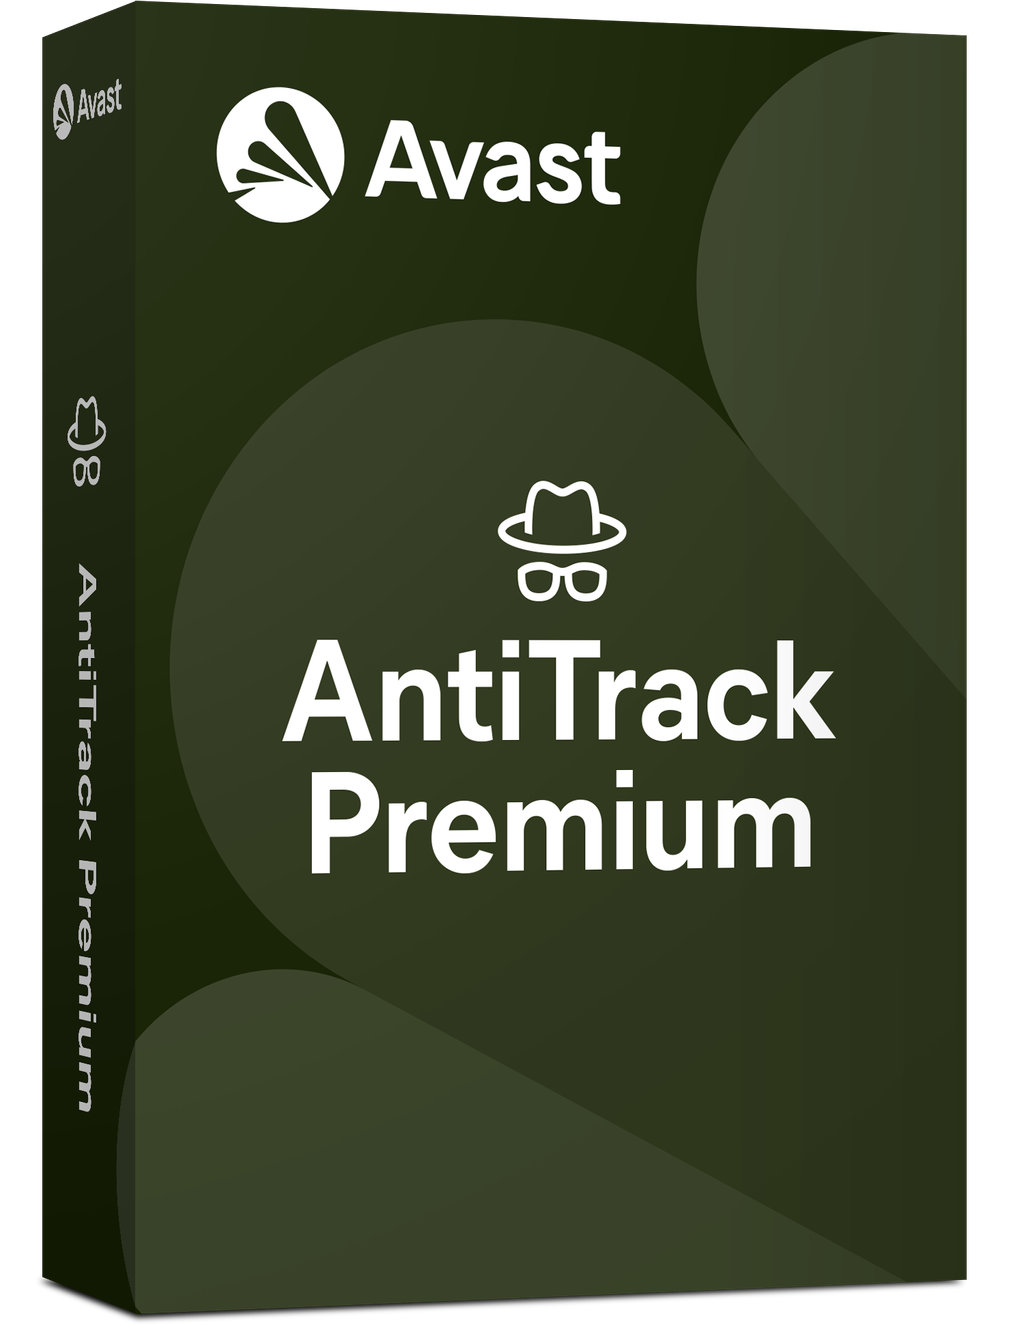 Avast_AntiTrack_Premium_W_3D_Simplified_Box_right